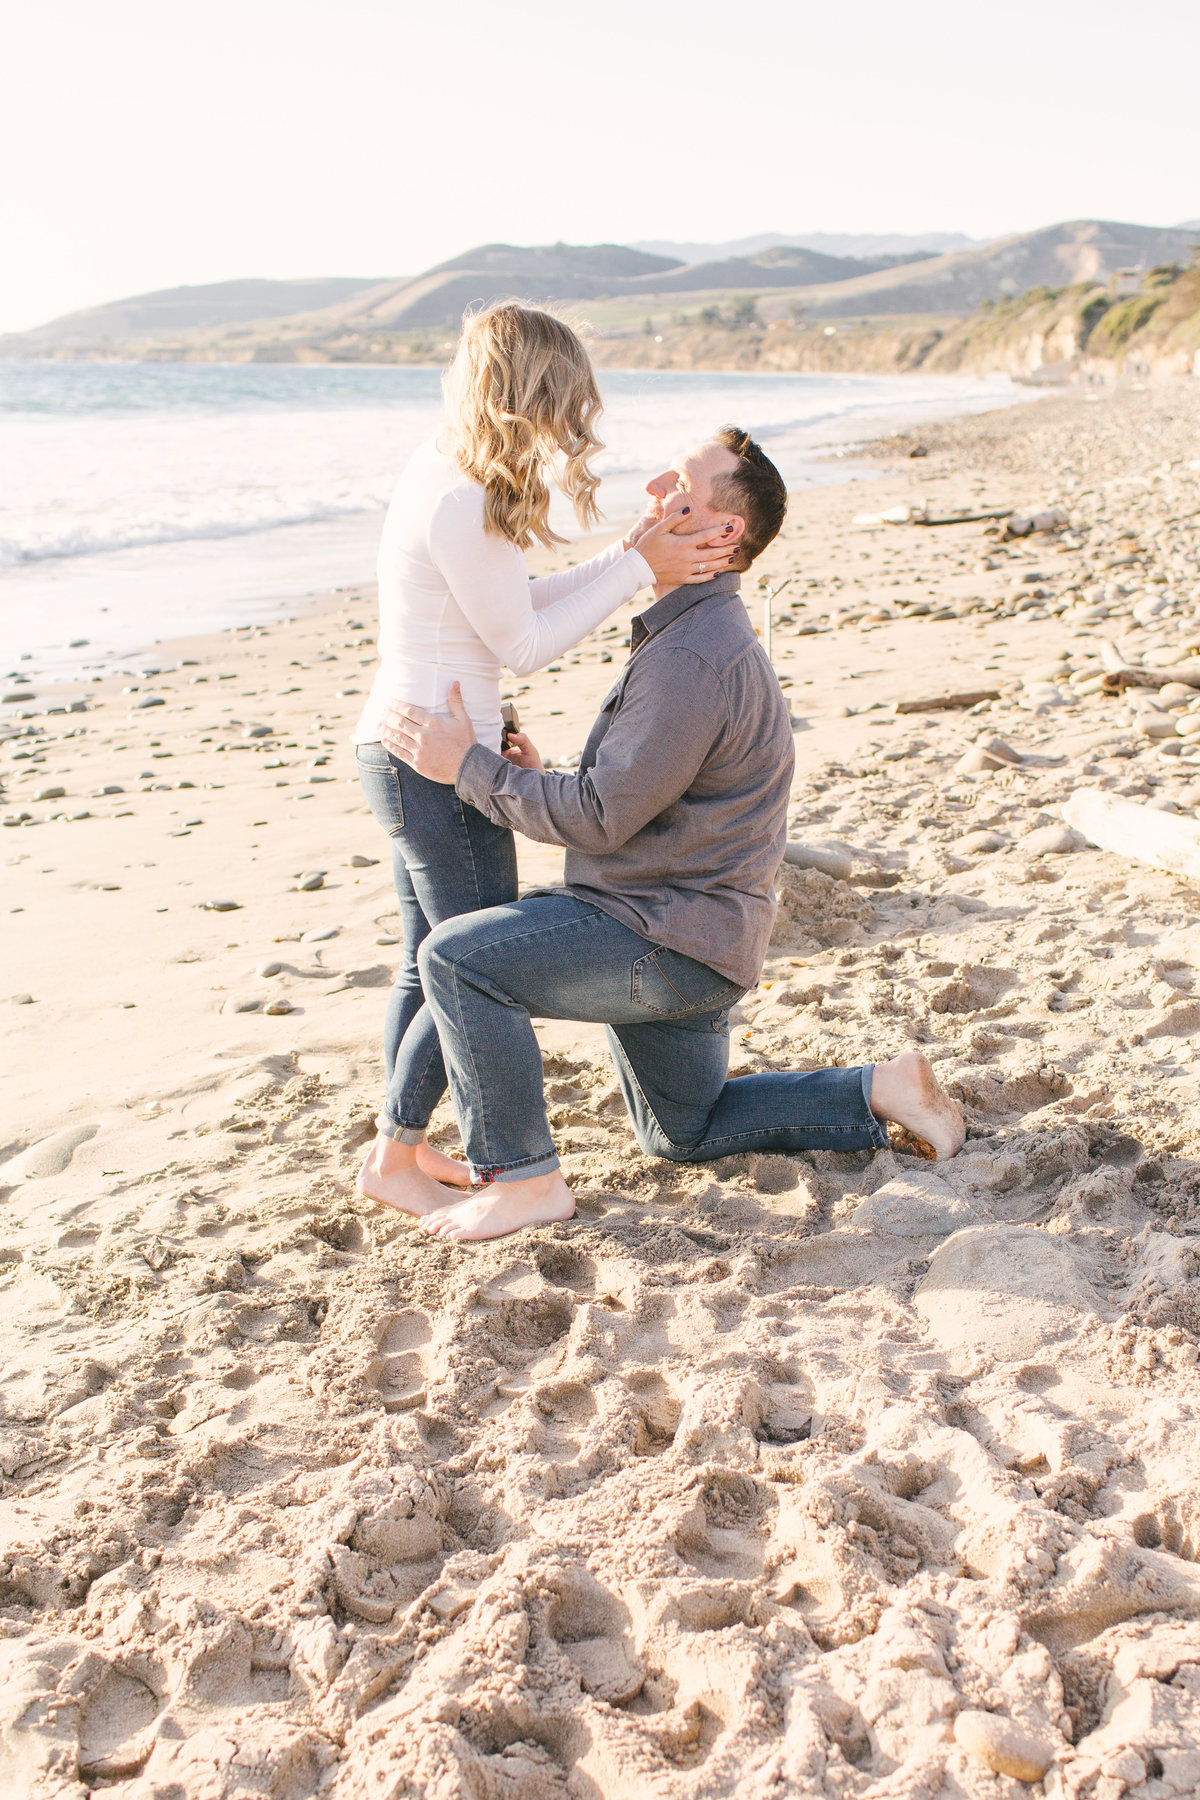 Man proposes to girl at El Capitan Beach